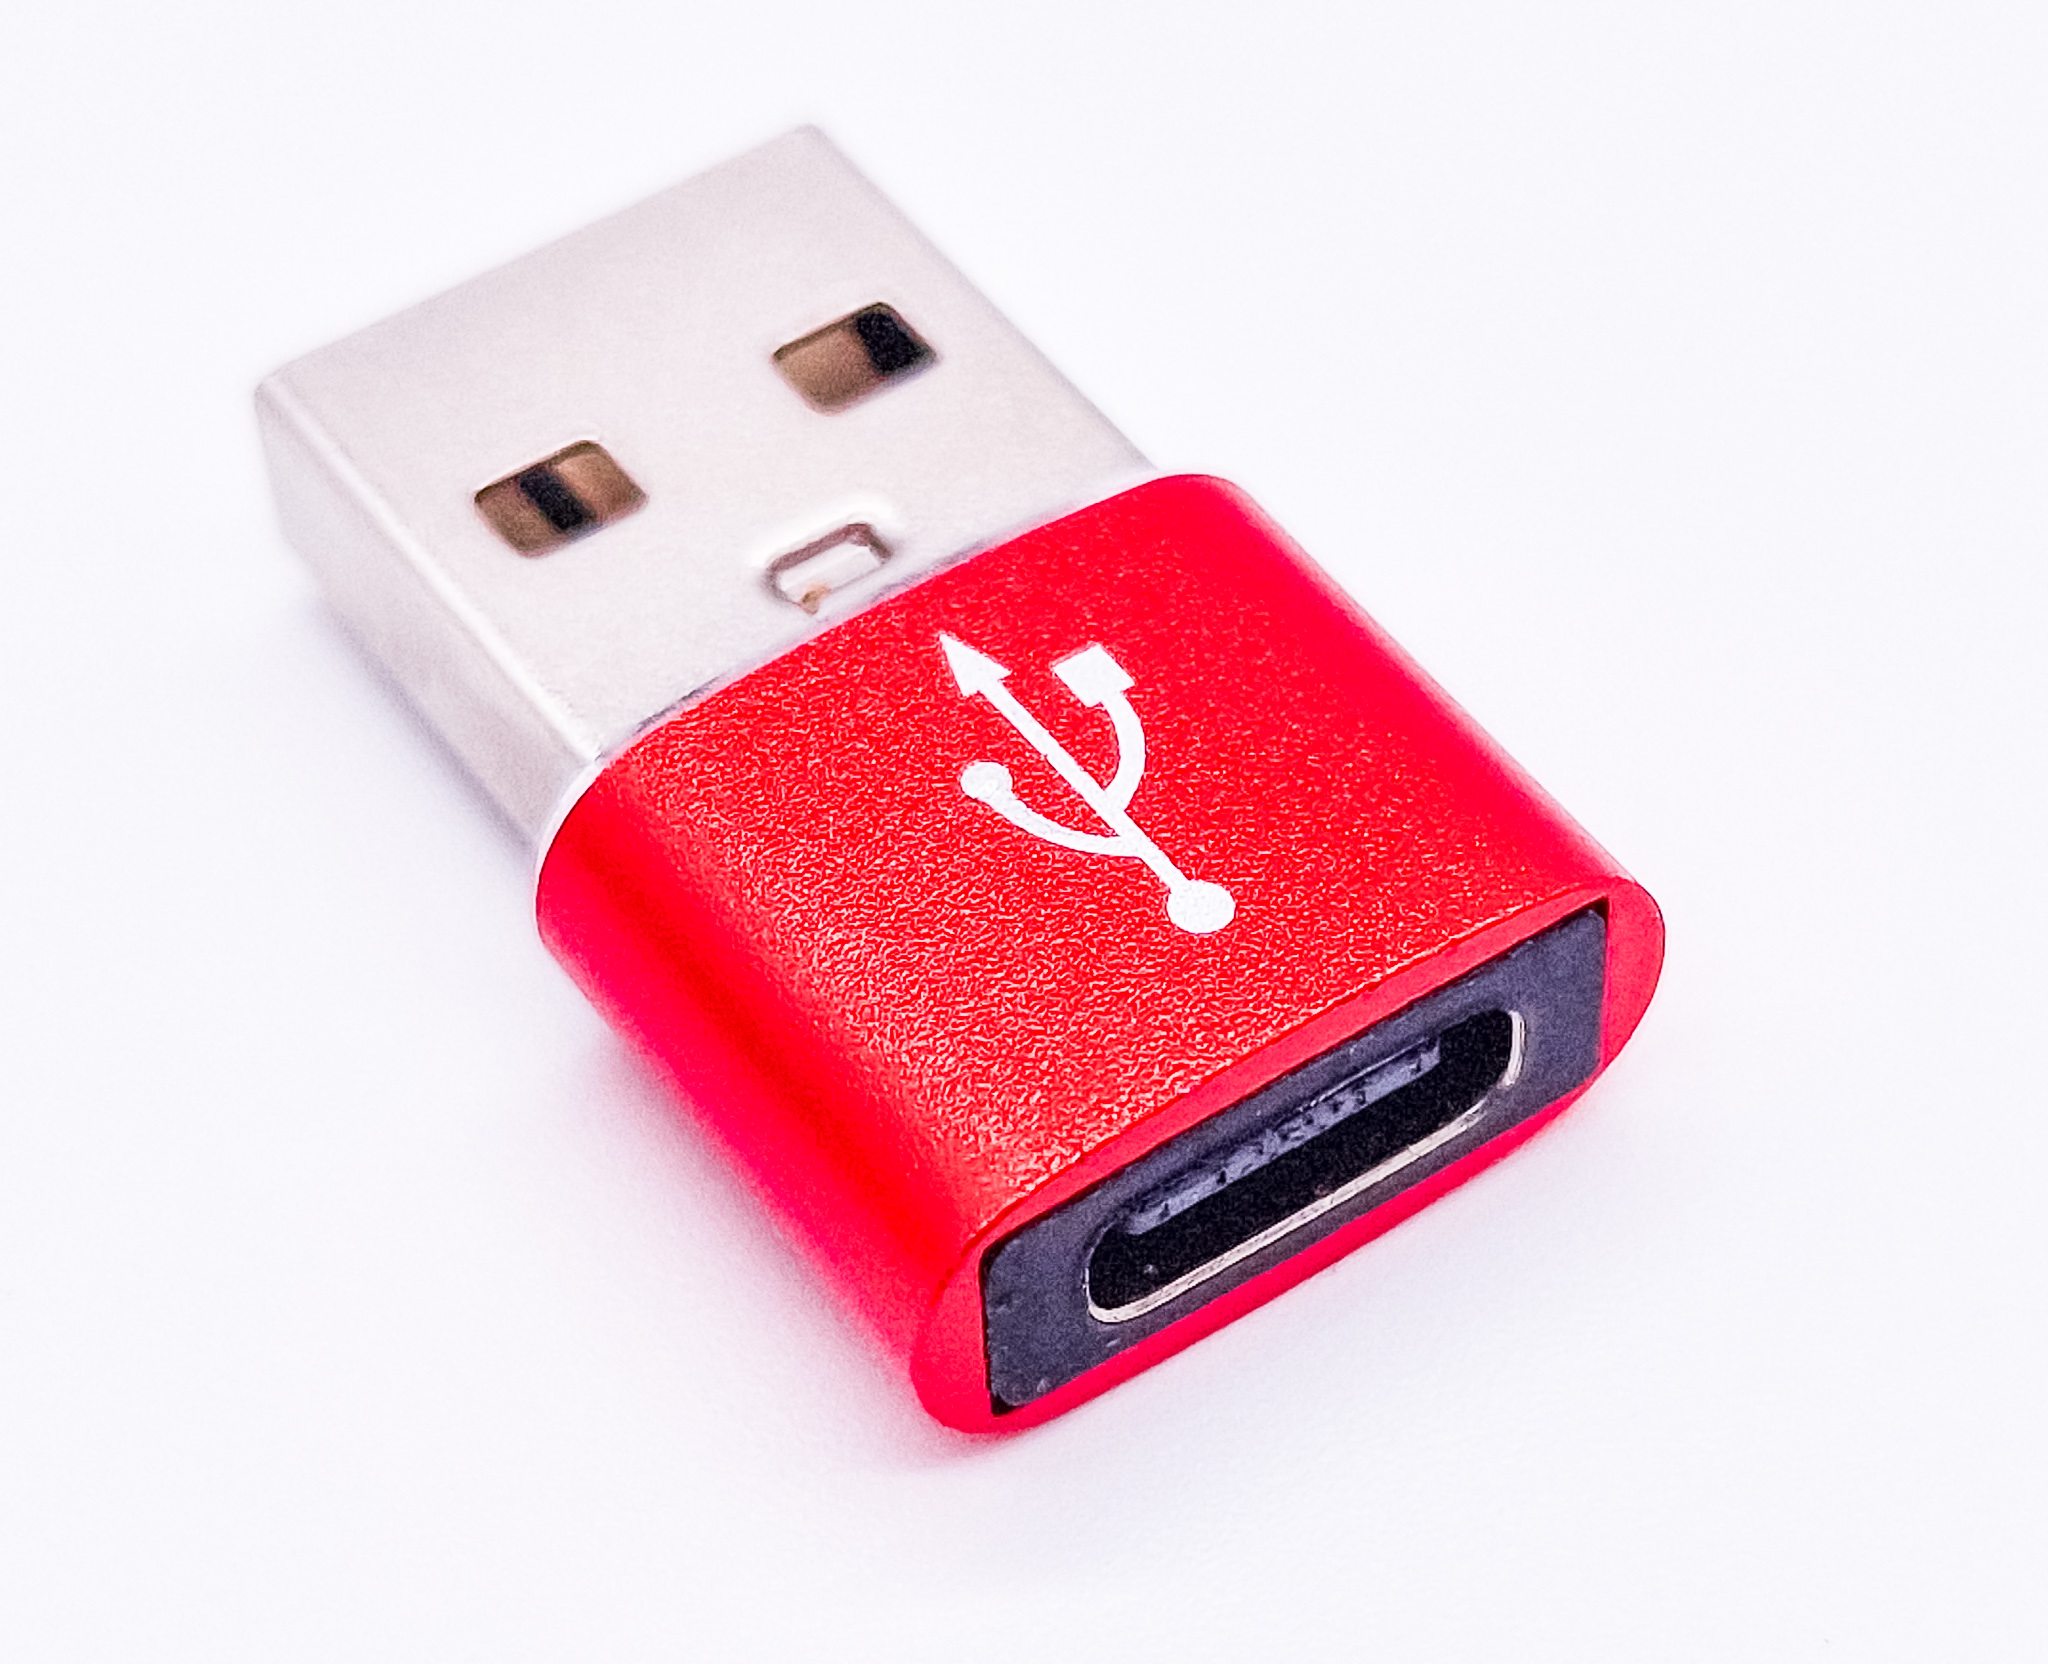 USBc to USB A converter Frank Doorhof